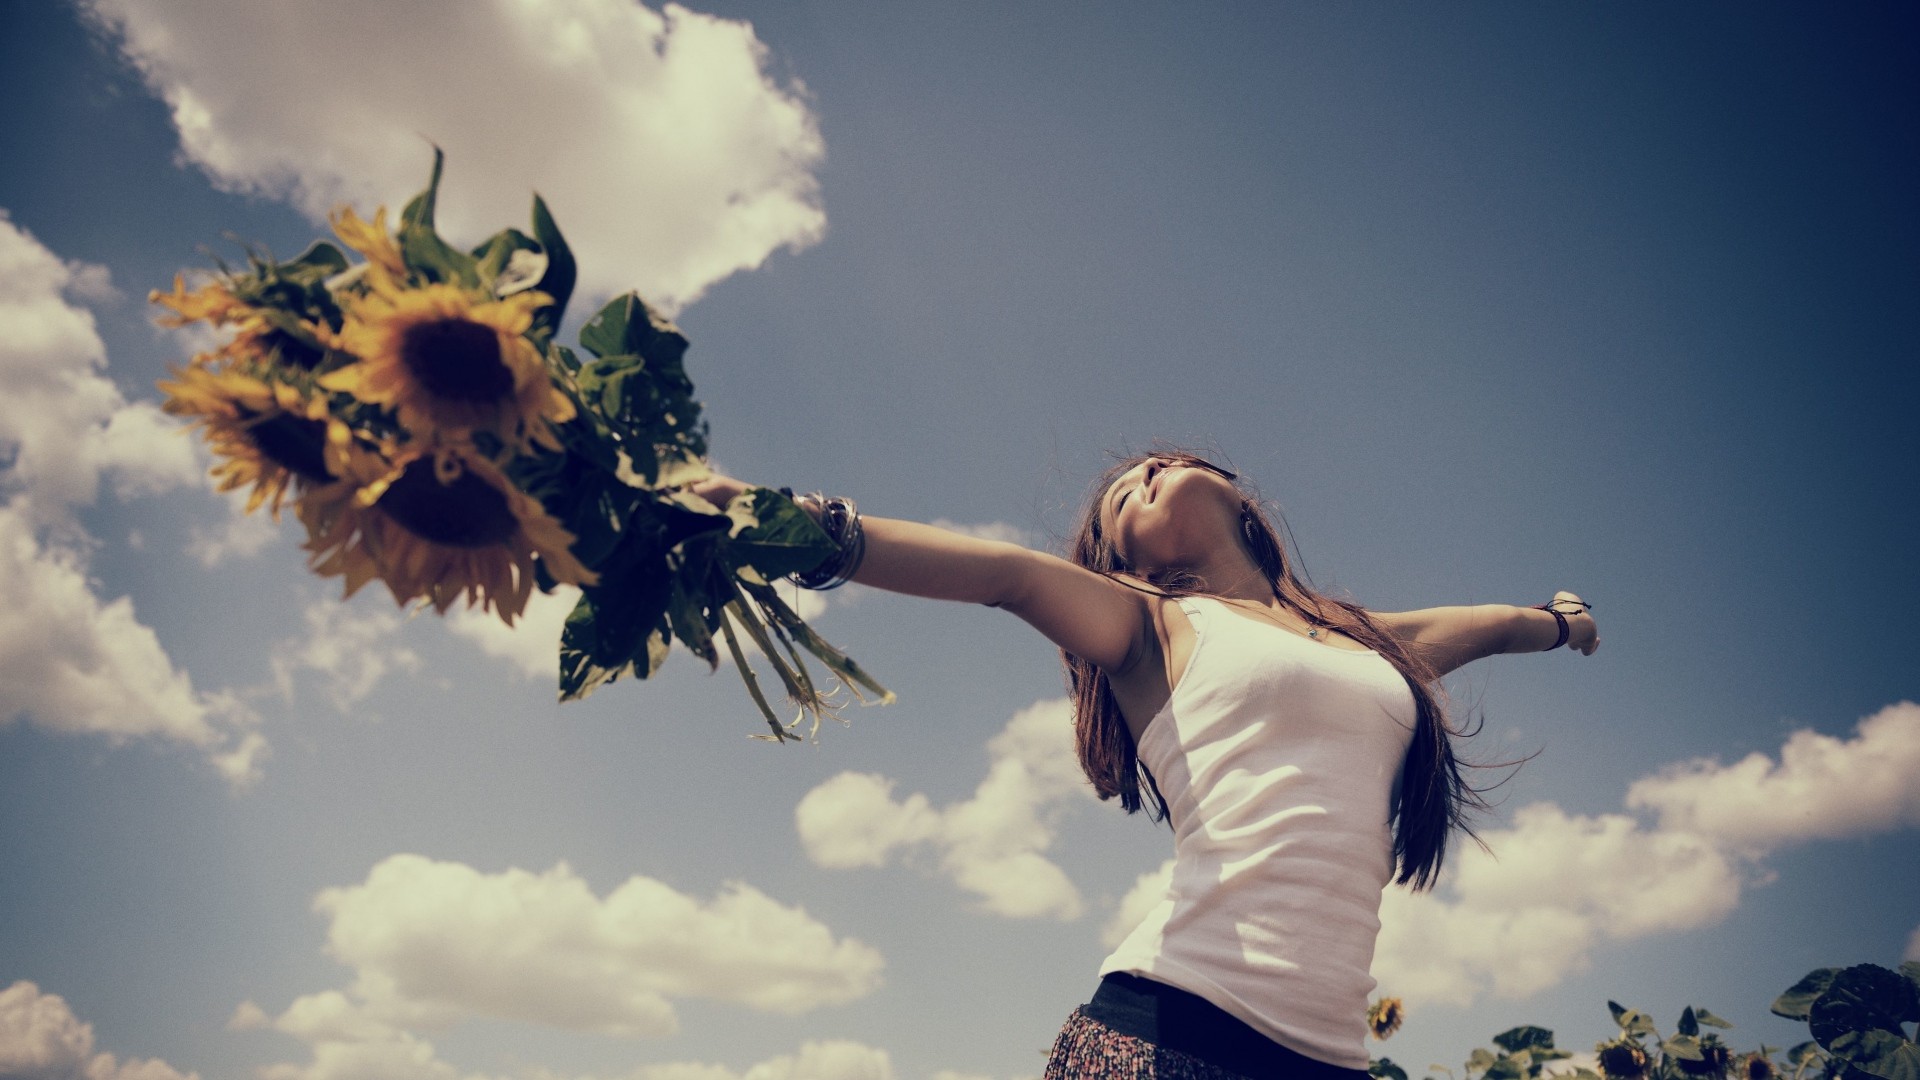 People 1920x1080 women women outdoors sunflowers closed eyes flowers sky plants yellow flowers clouds standing happy